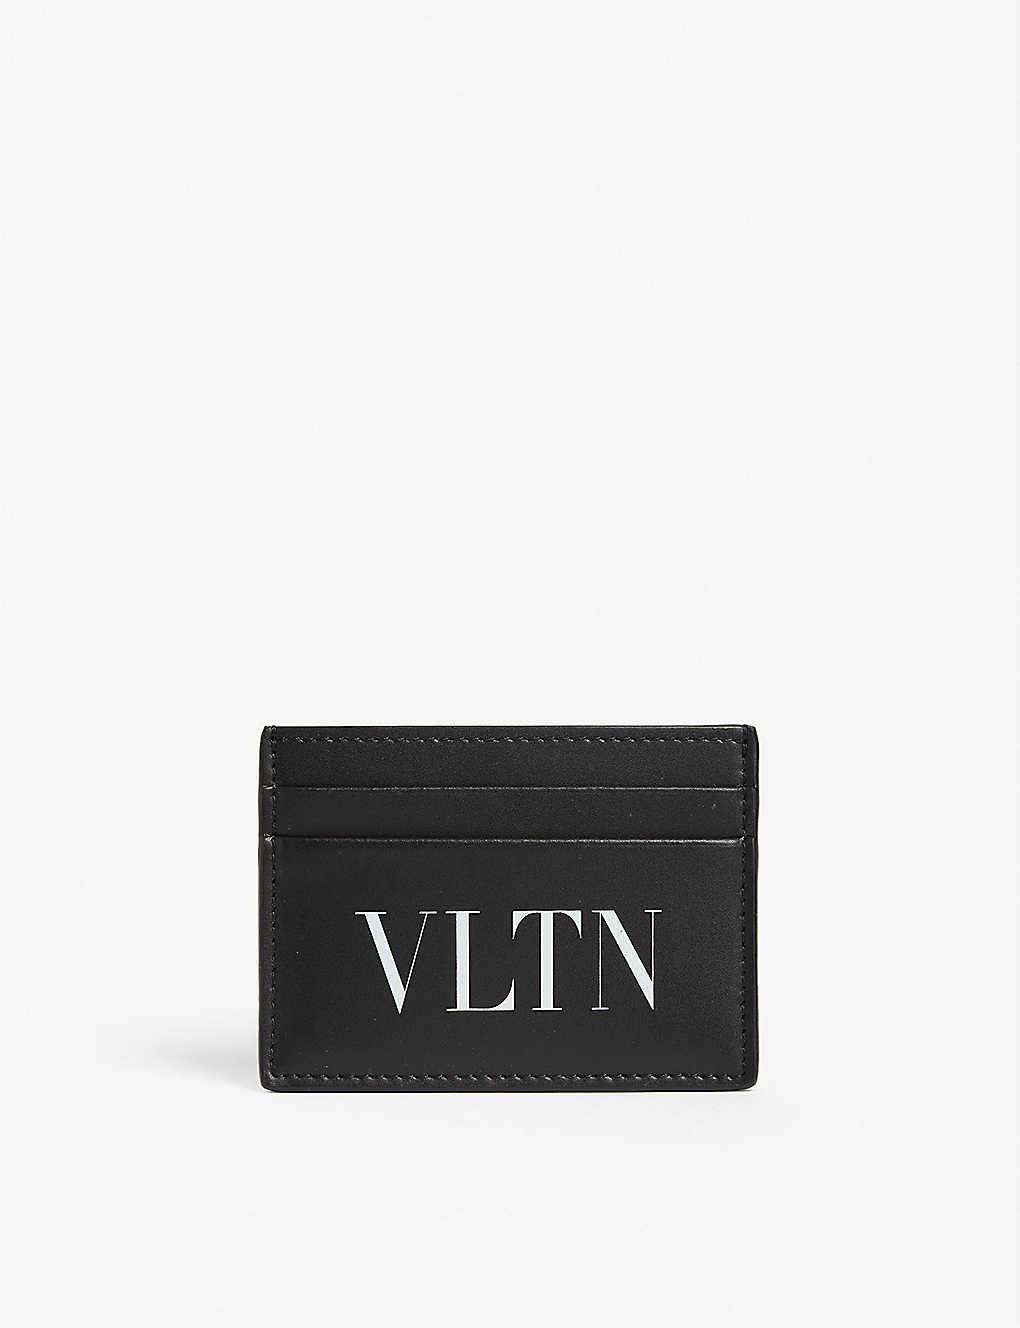 Valentino Garavani Leather Vltn Card Holder in Black for Men - Save 61% ...